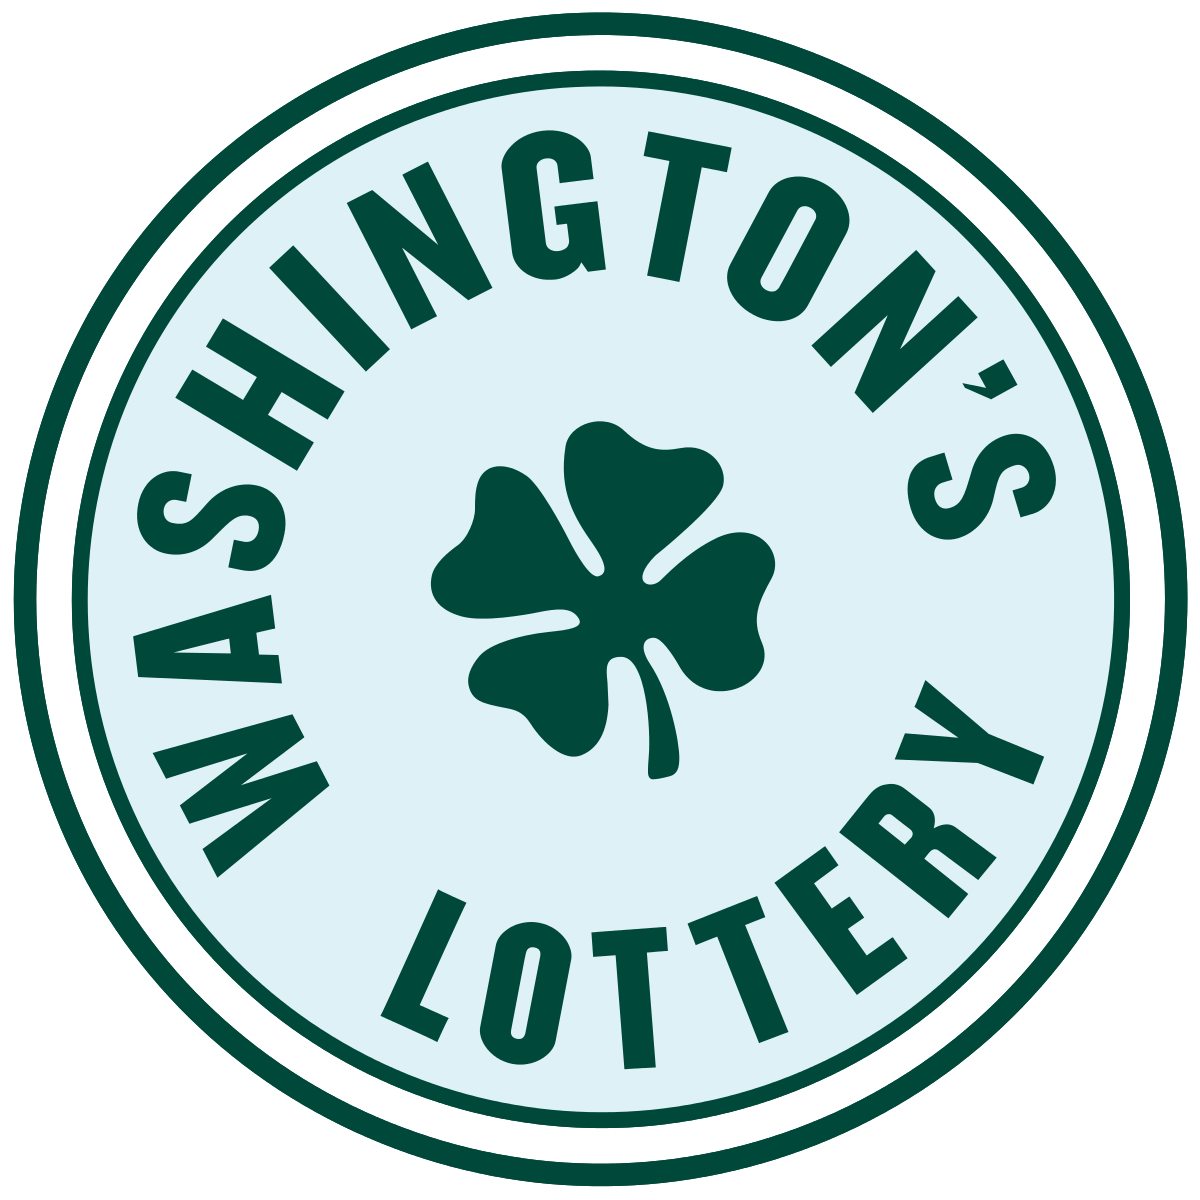 Washington's_Lottery_logo.svg.png